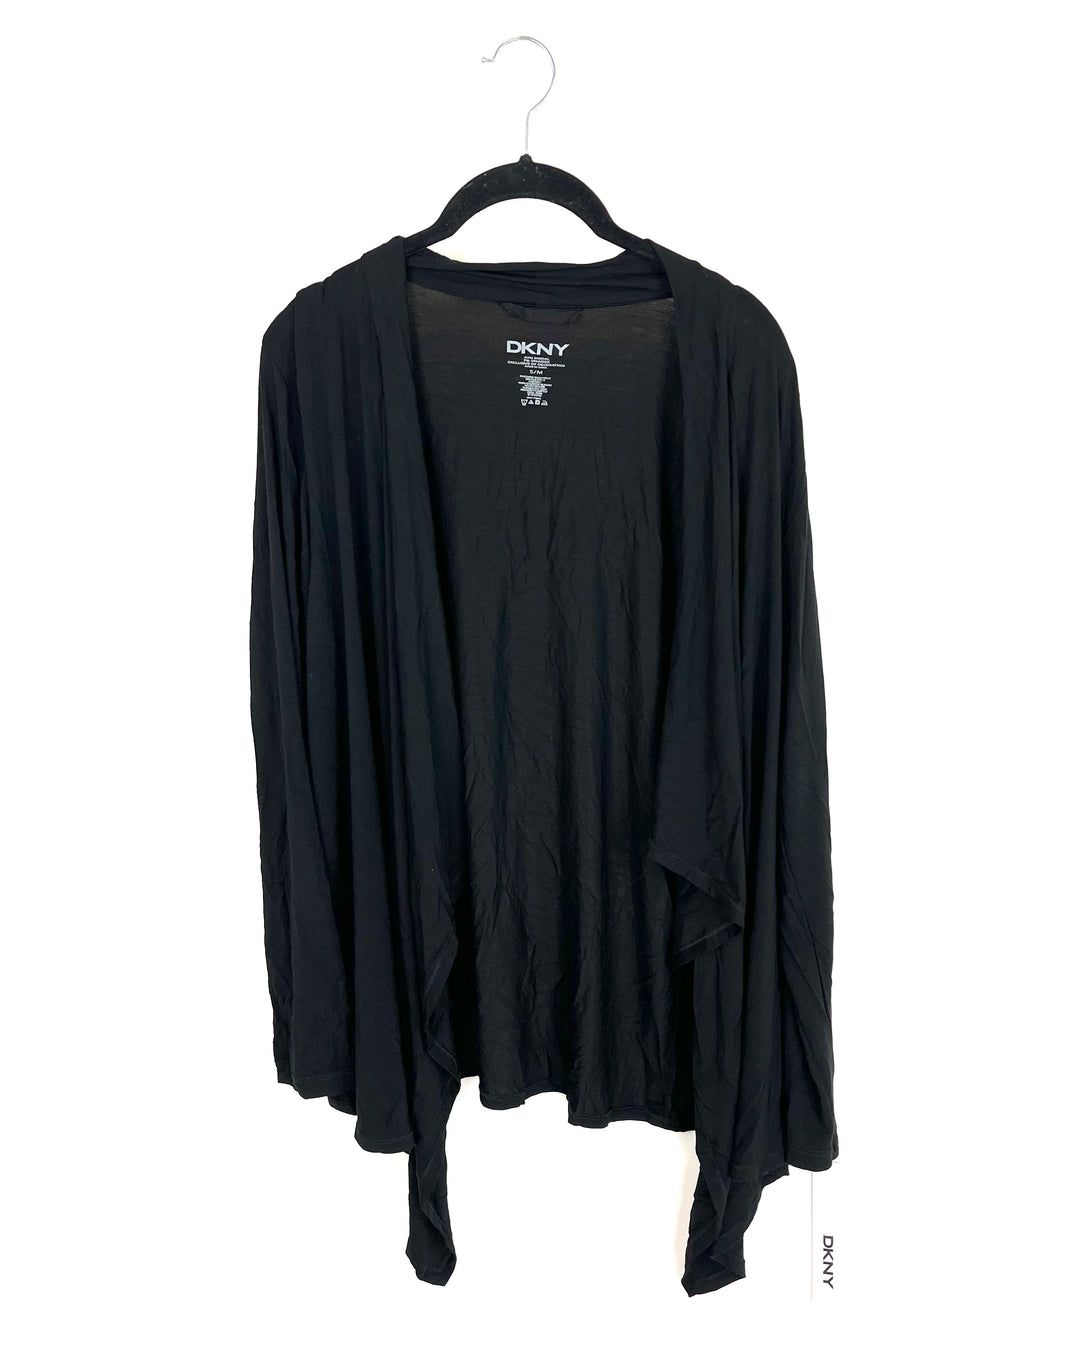 Black Long Sleeve Open Cardigan - Size 6/8